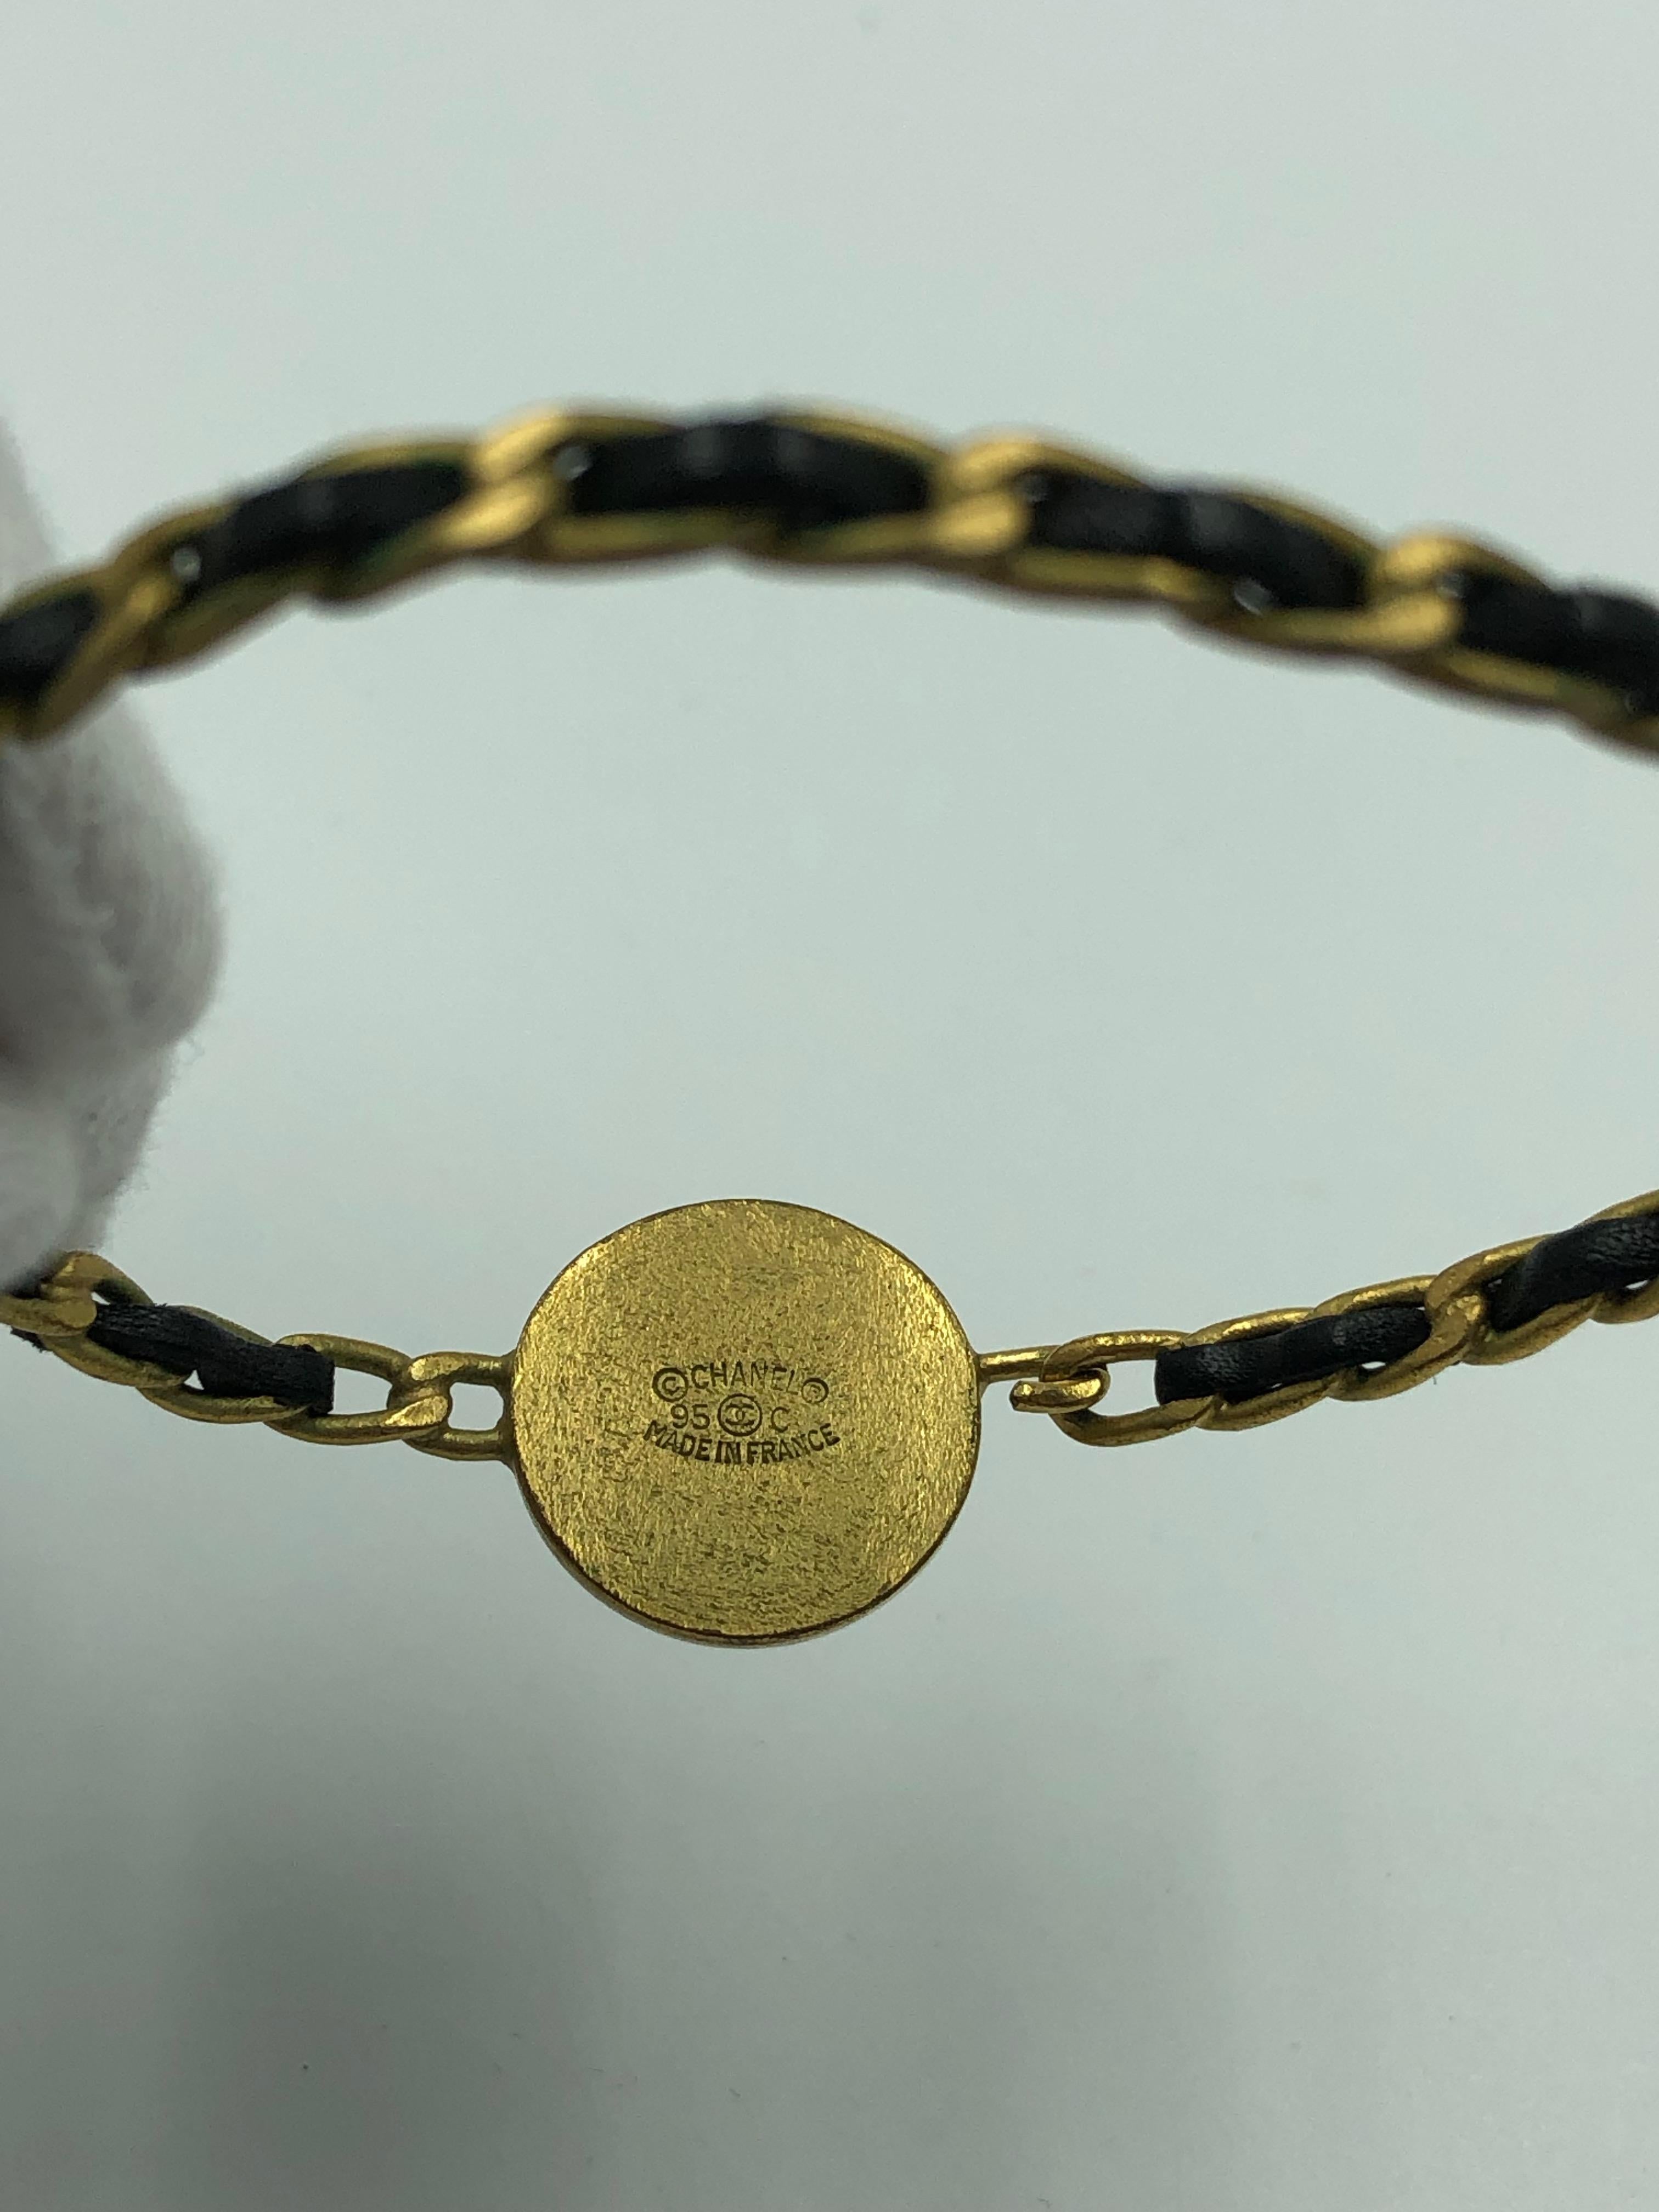 Chanel Rare Vintage Twisted Gold Metall und Leder-Armband mit Chanel Medaillon Verschluss

*MASSNAHMEN*
Innerer Umfang: 7